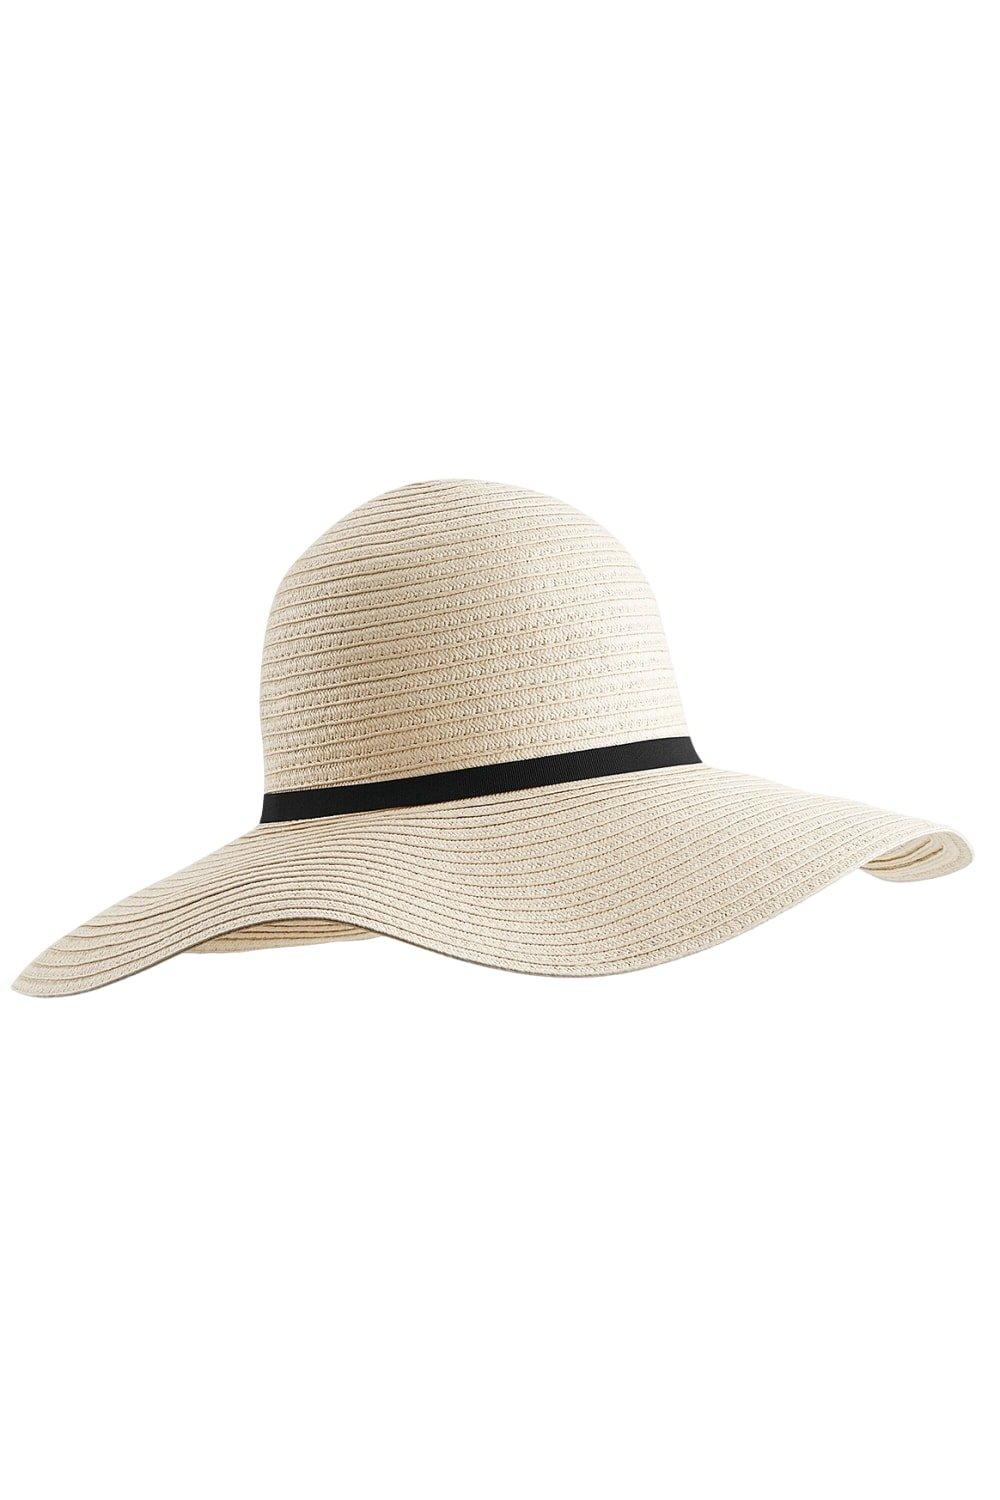 Шляпа от солнца с широкими полями Marbella Beechfield, обнаженная шляпа женская с широкими полями и бантом складная соломенная панама от солнца с защитой от ультрафиолета для пляжа летняя